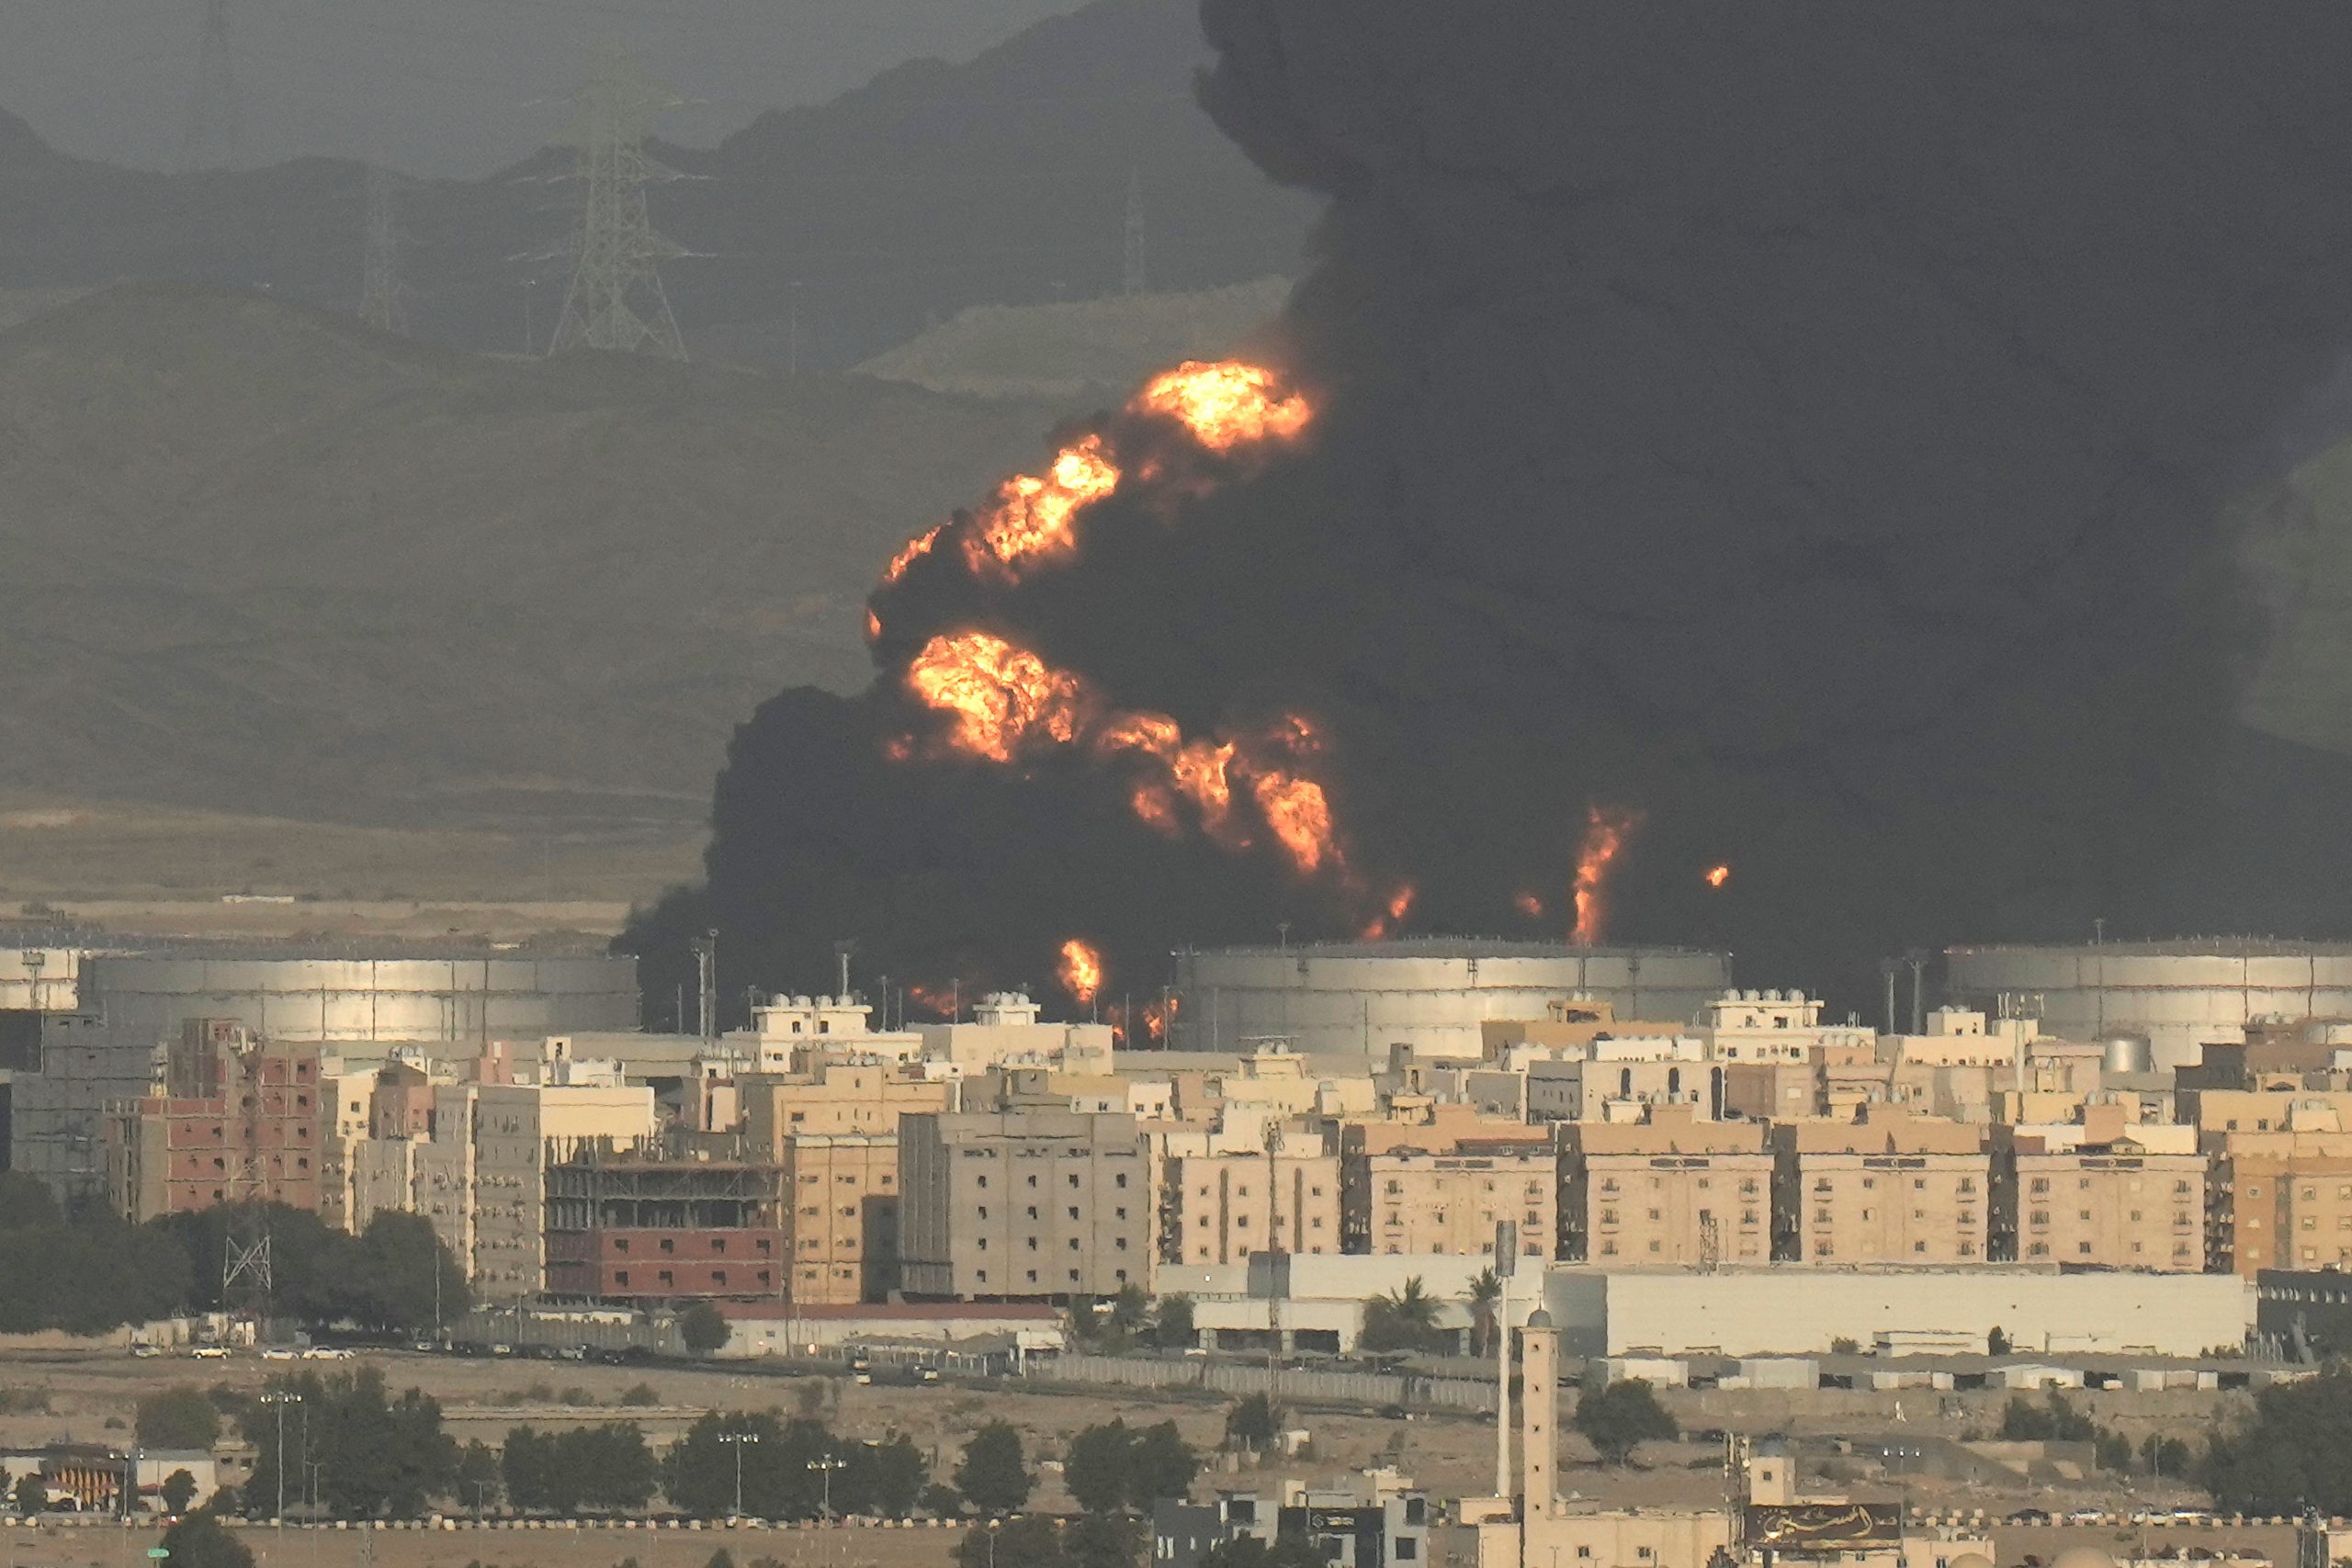 Huge fire in Saudi city of Jeddah ahead of F1 race, Yemen rebels claim attacks